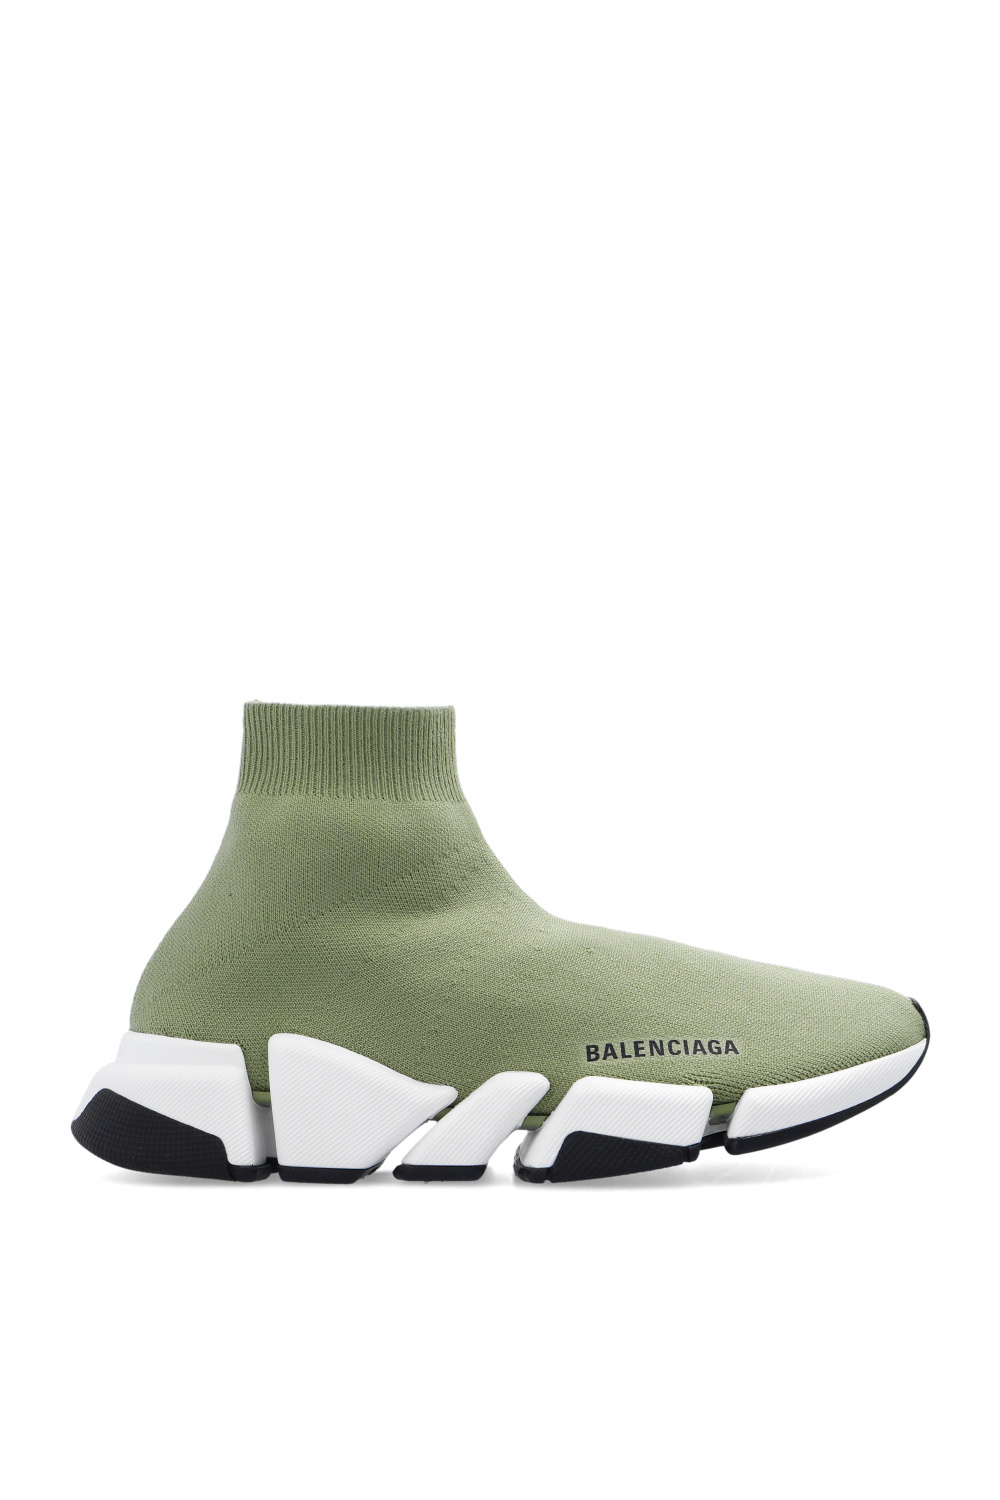 Balenciaga Black Logo Print Knit Fabric Speed Trainer Sneakers Size 38  Balenciaga  TLC